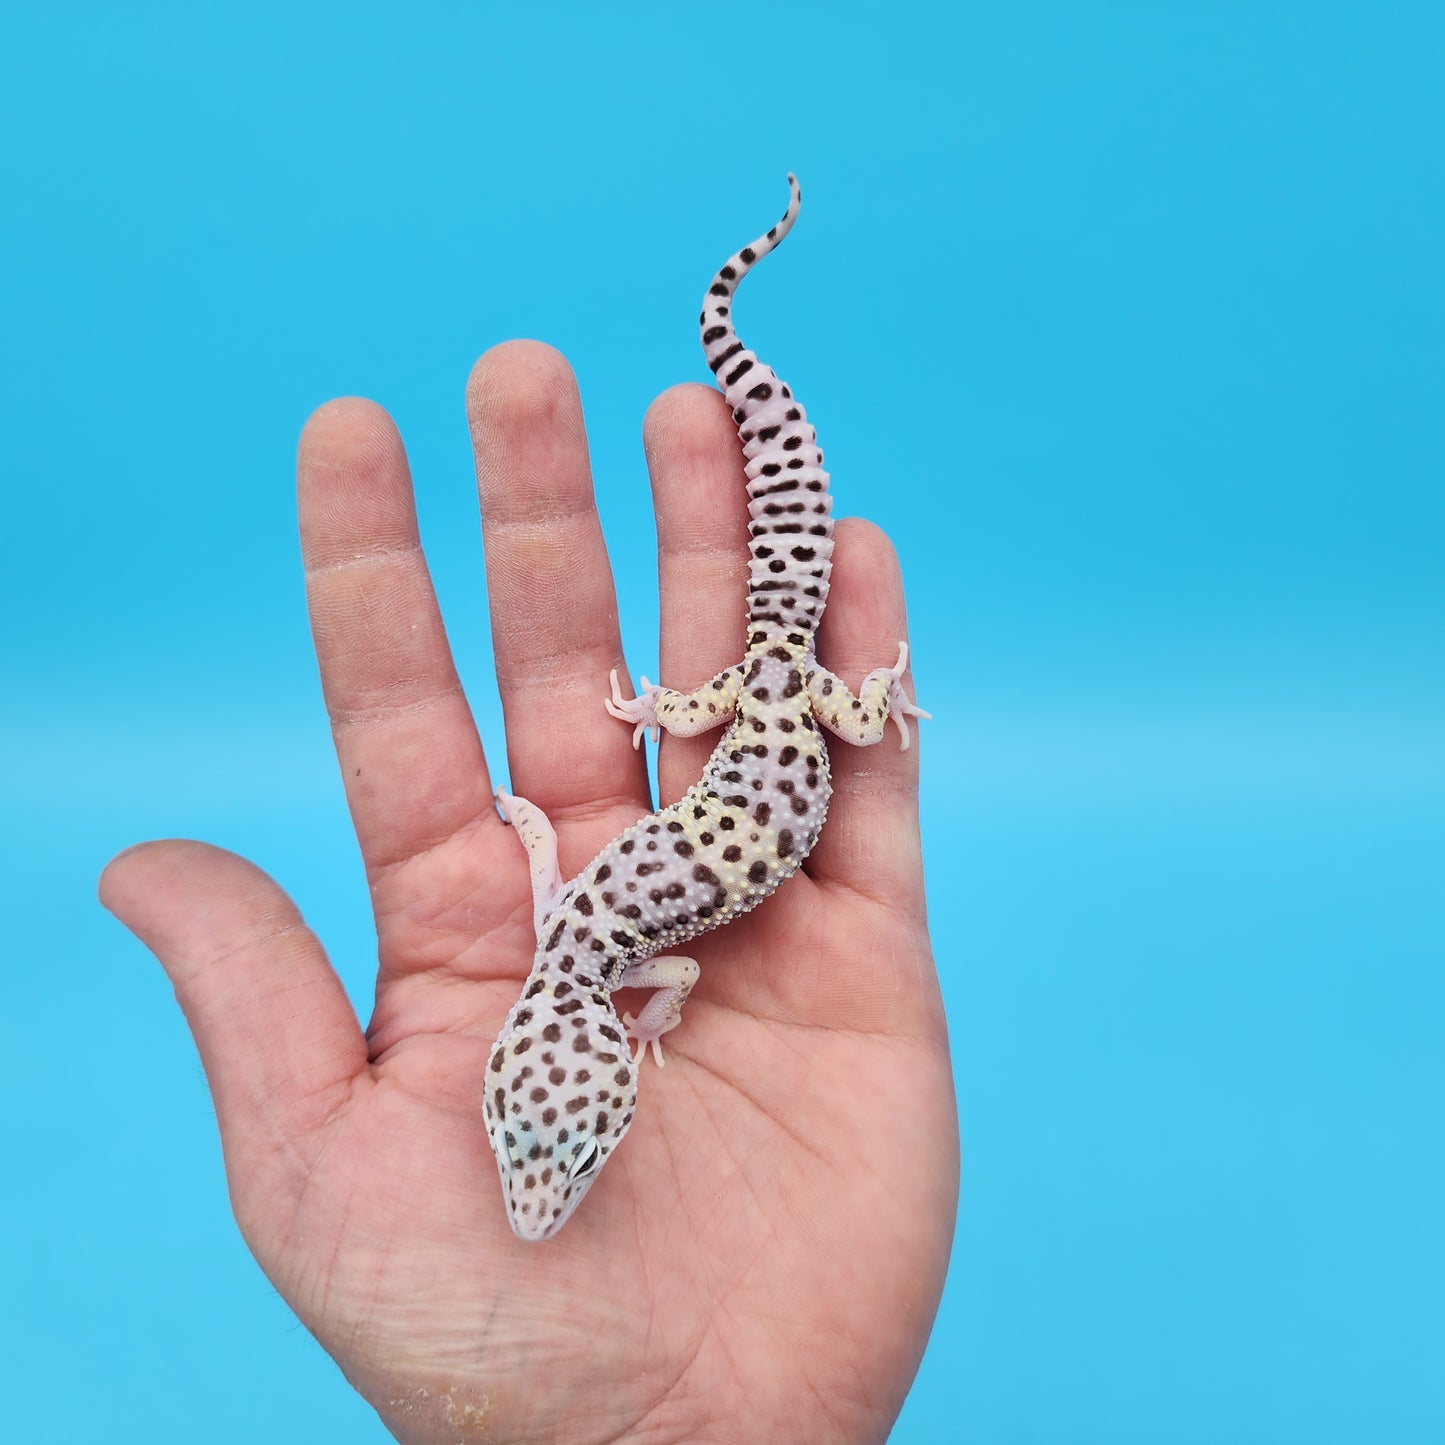 Male Fasciolatus Mack Snow High Lavender Phase Leopard Gecko